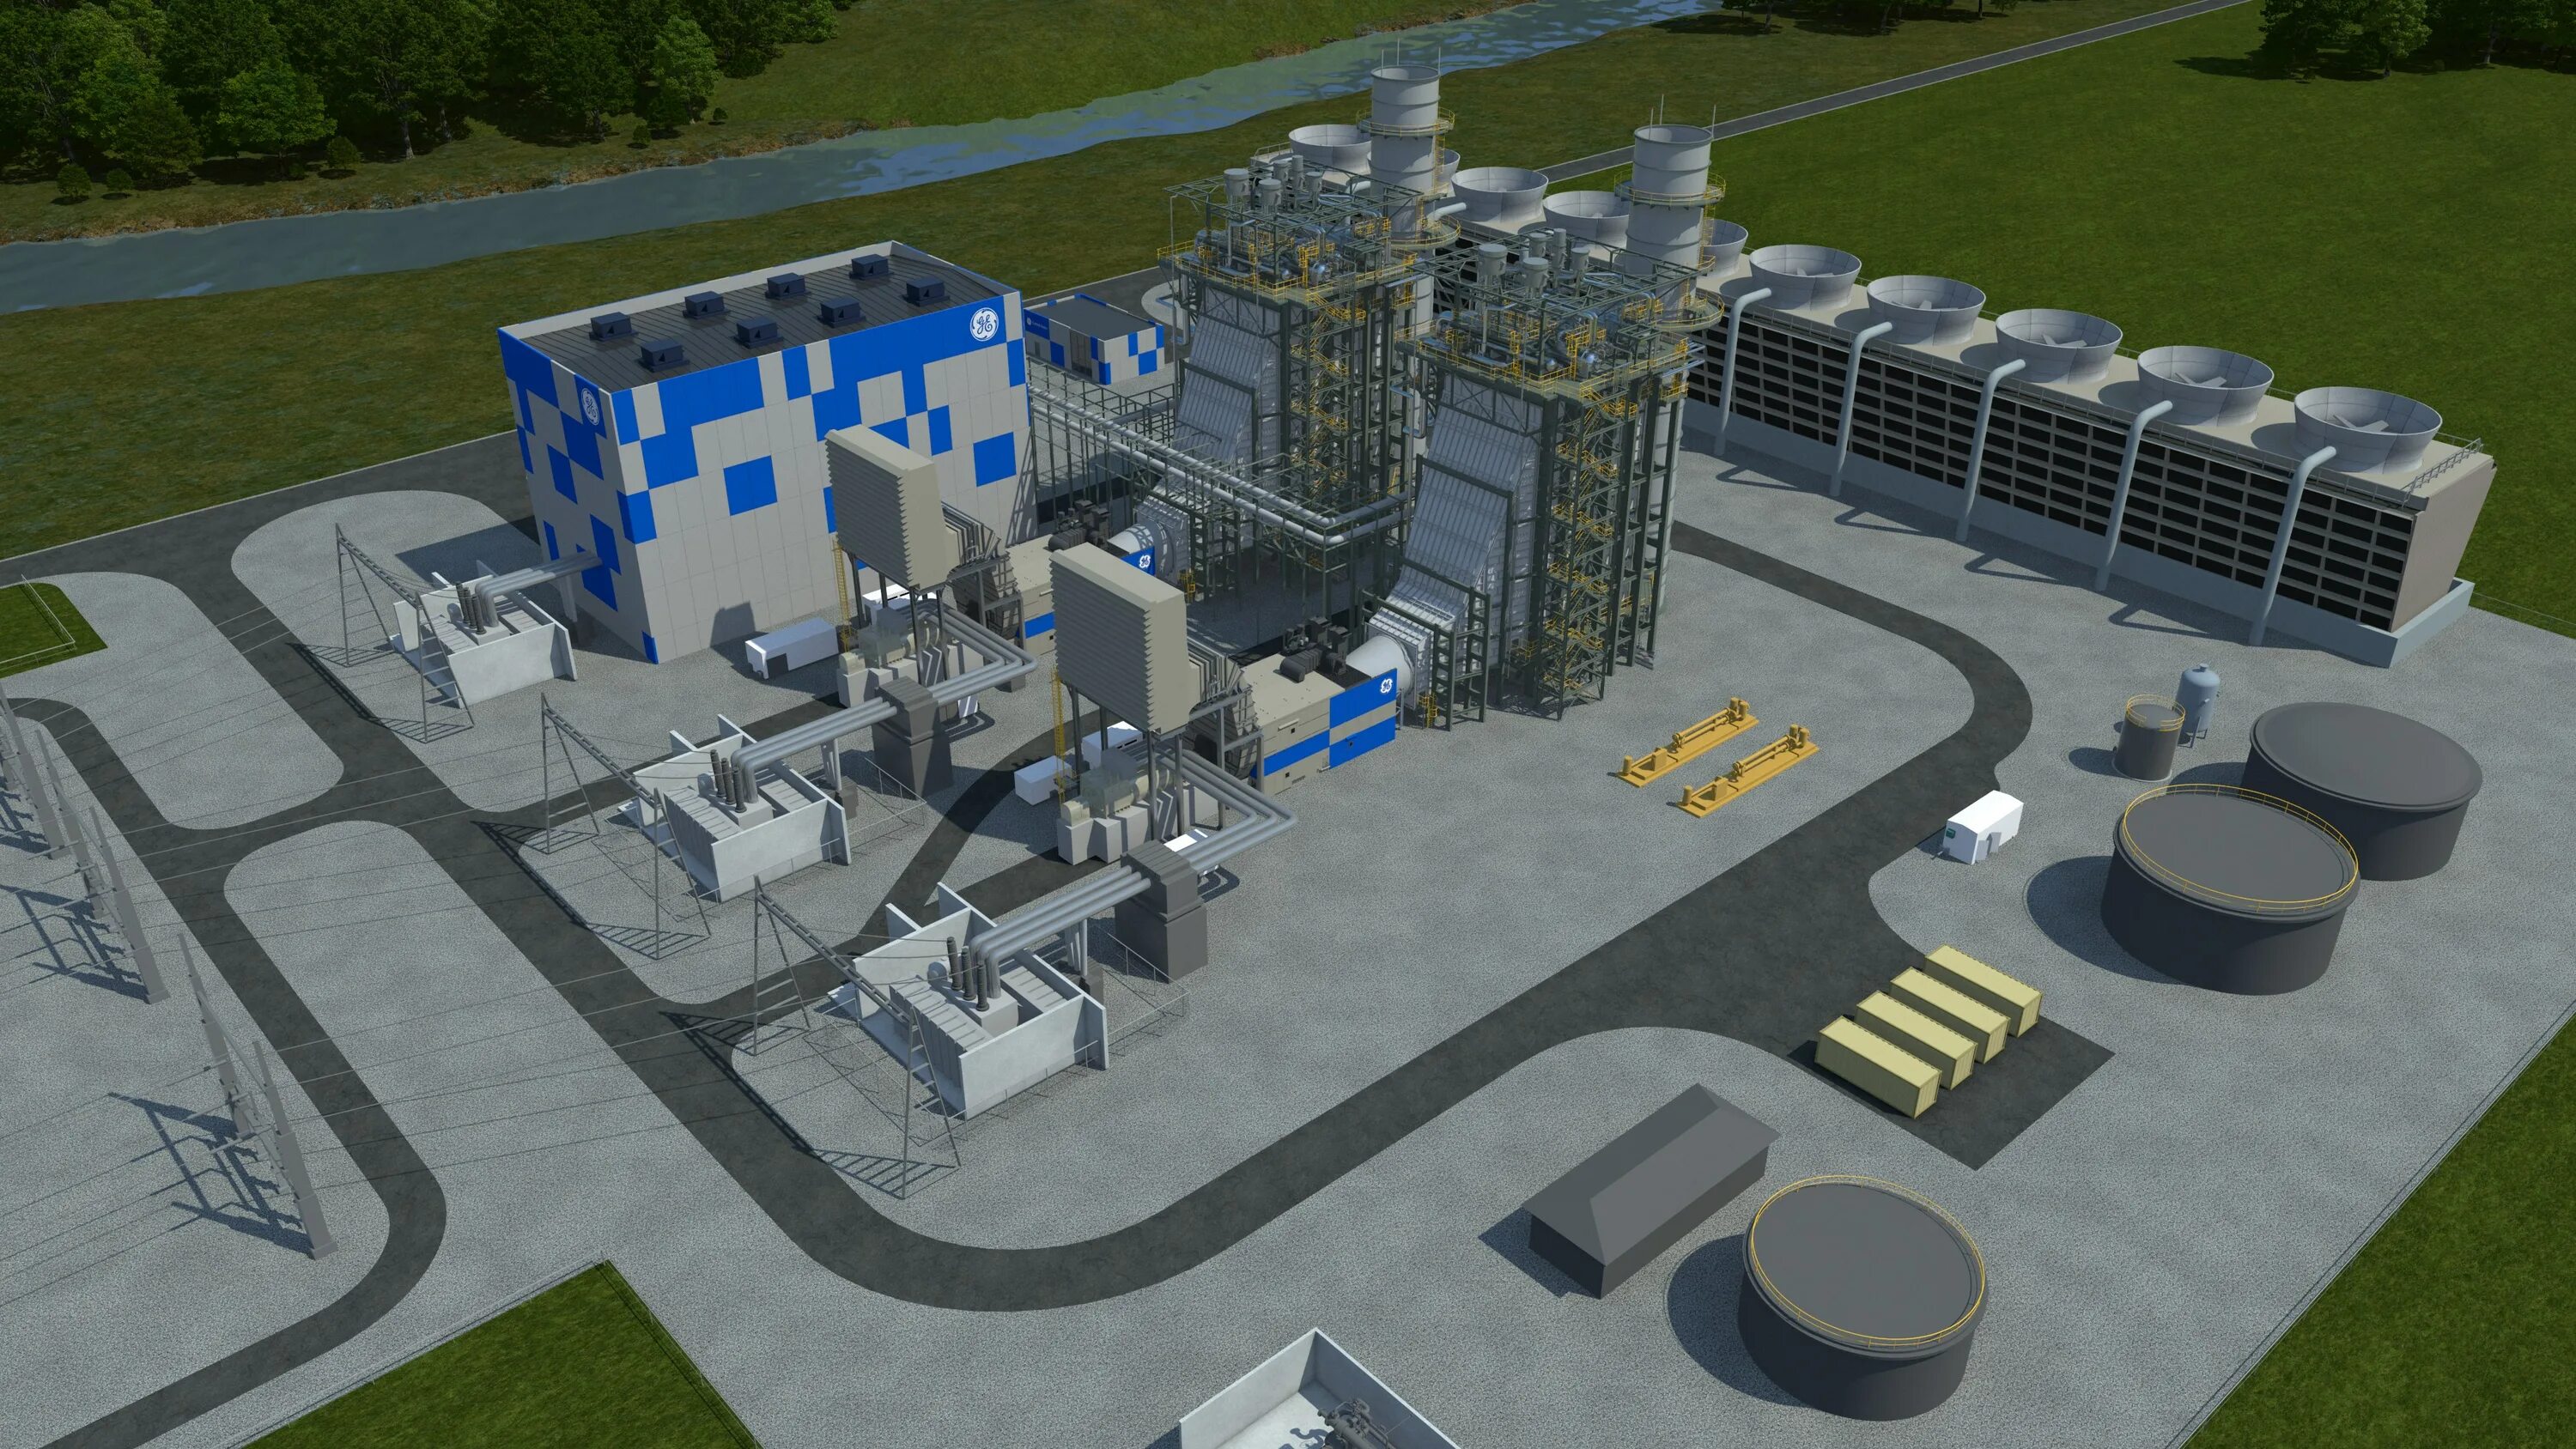 Power plant 3. Combined Cycle Power Plant. Парогазовая электростанция. Визуализация агрегатов. Джейлбрейк Power Plant.